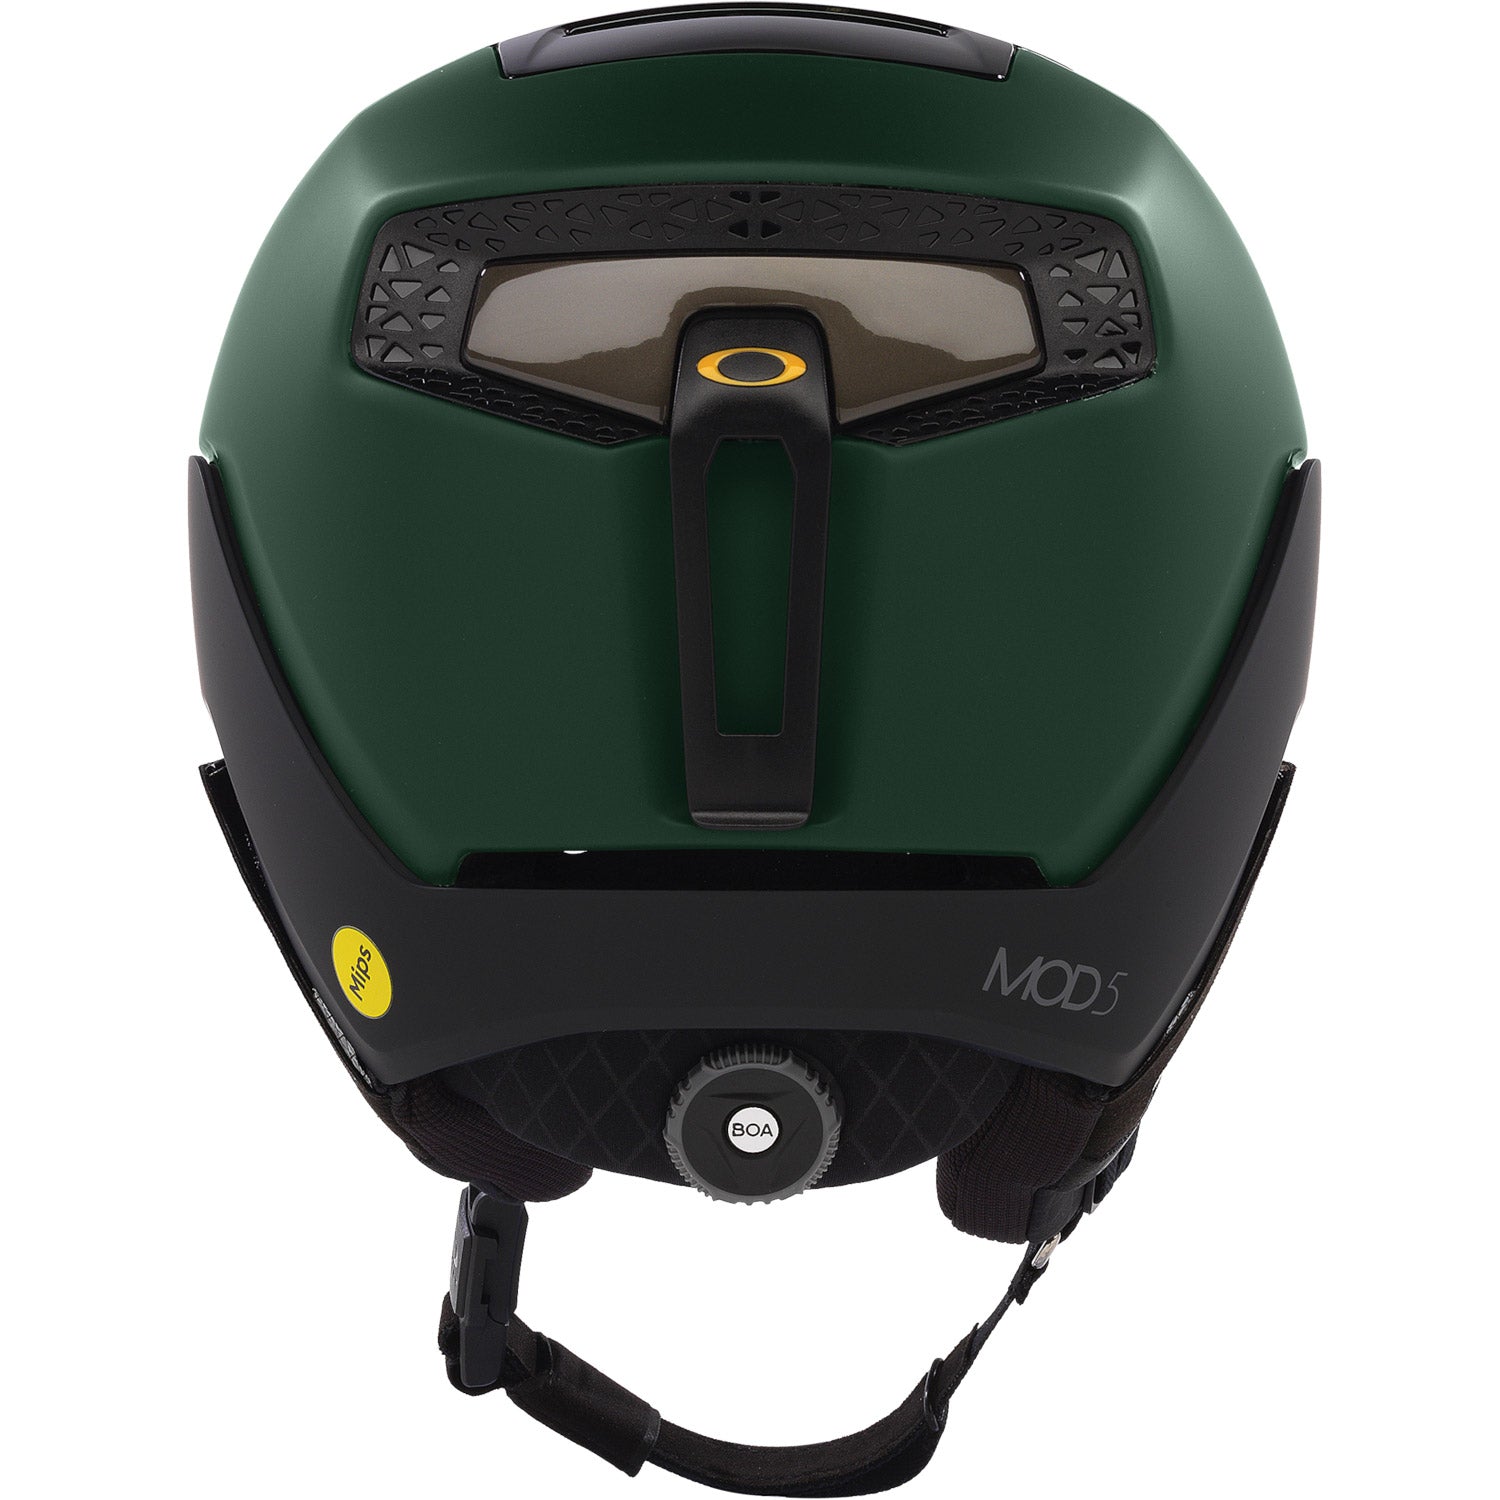 Mod5 Mips Snow Helmet